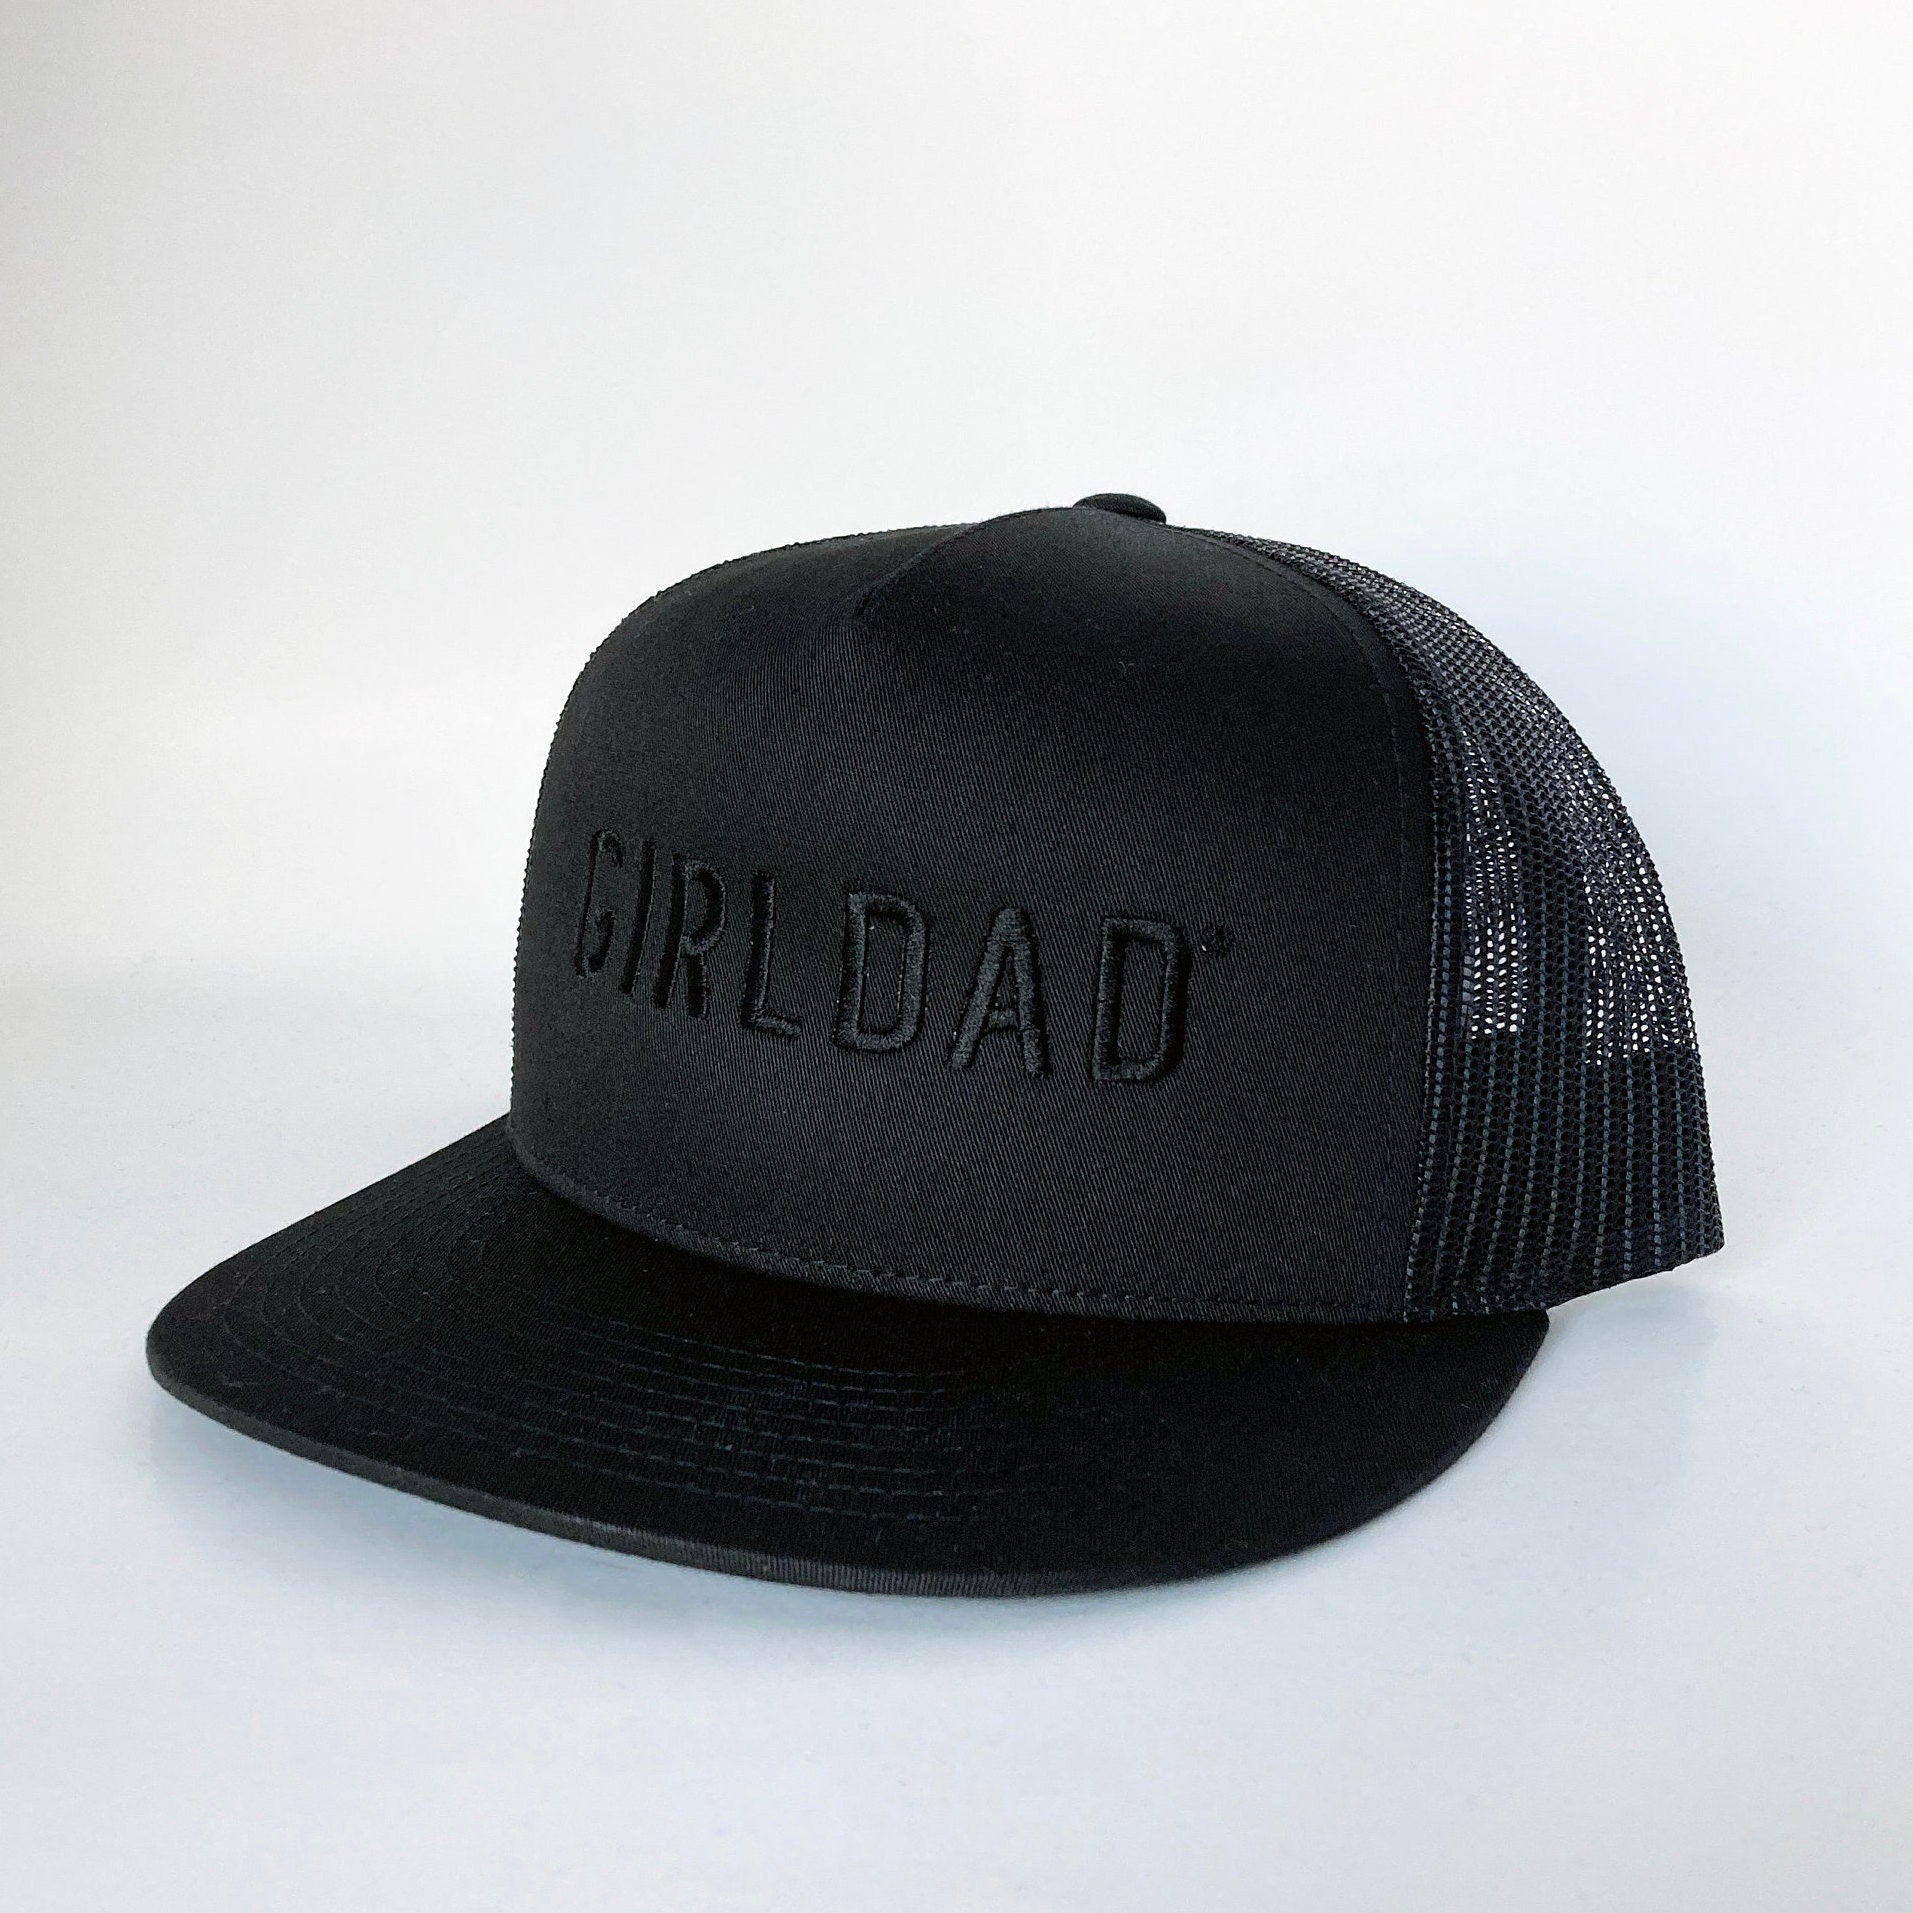 Girldad® Black/Black Embroidered Trucker Hat